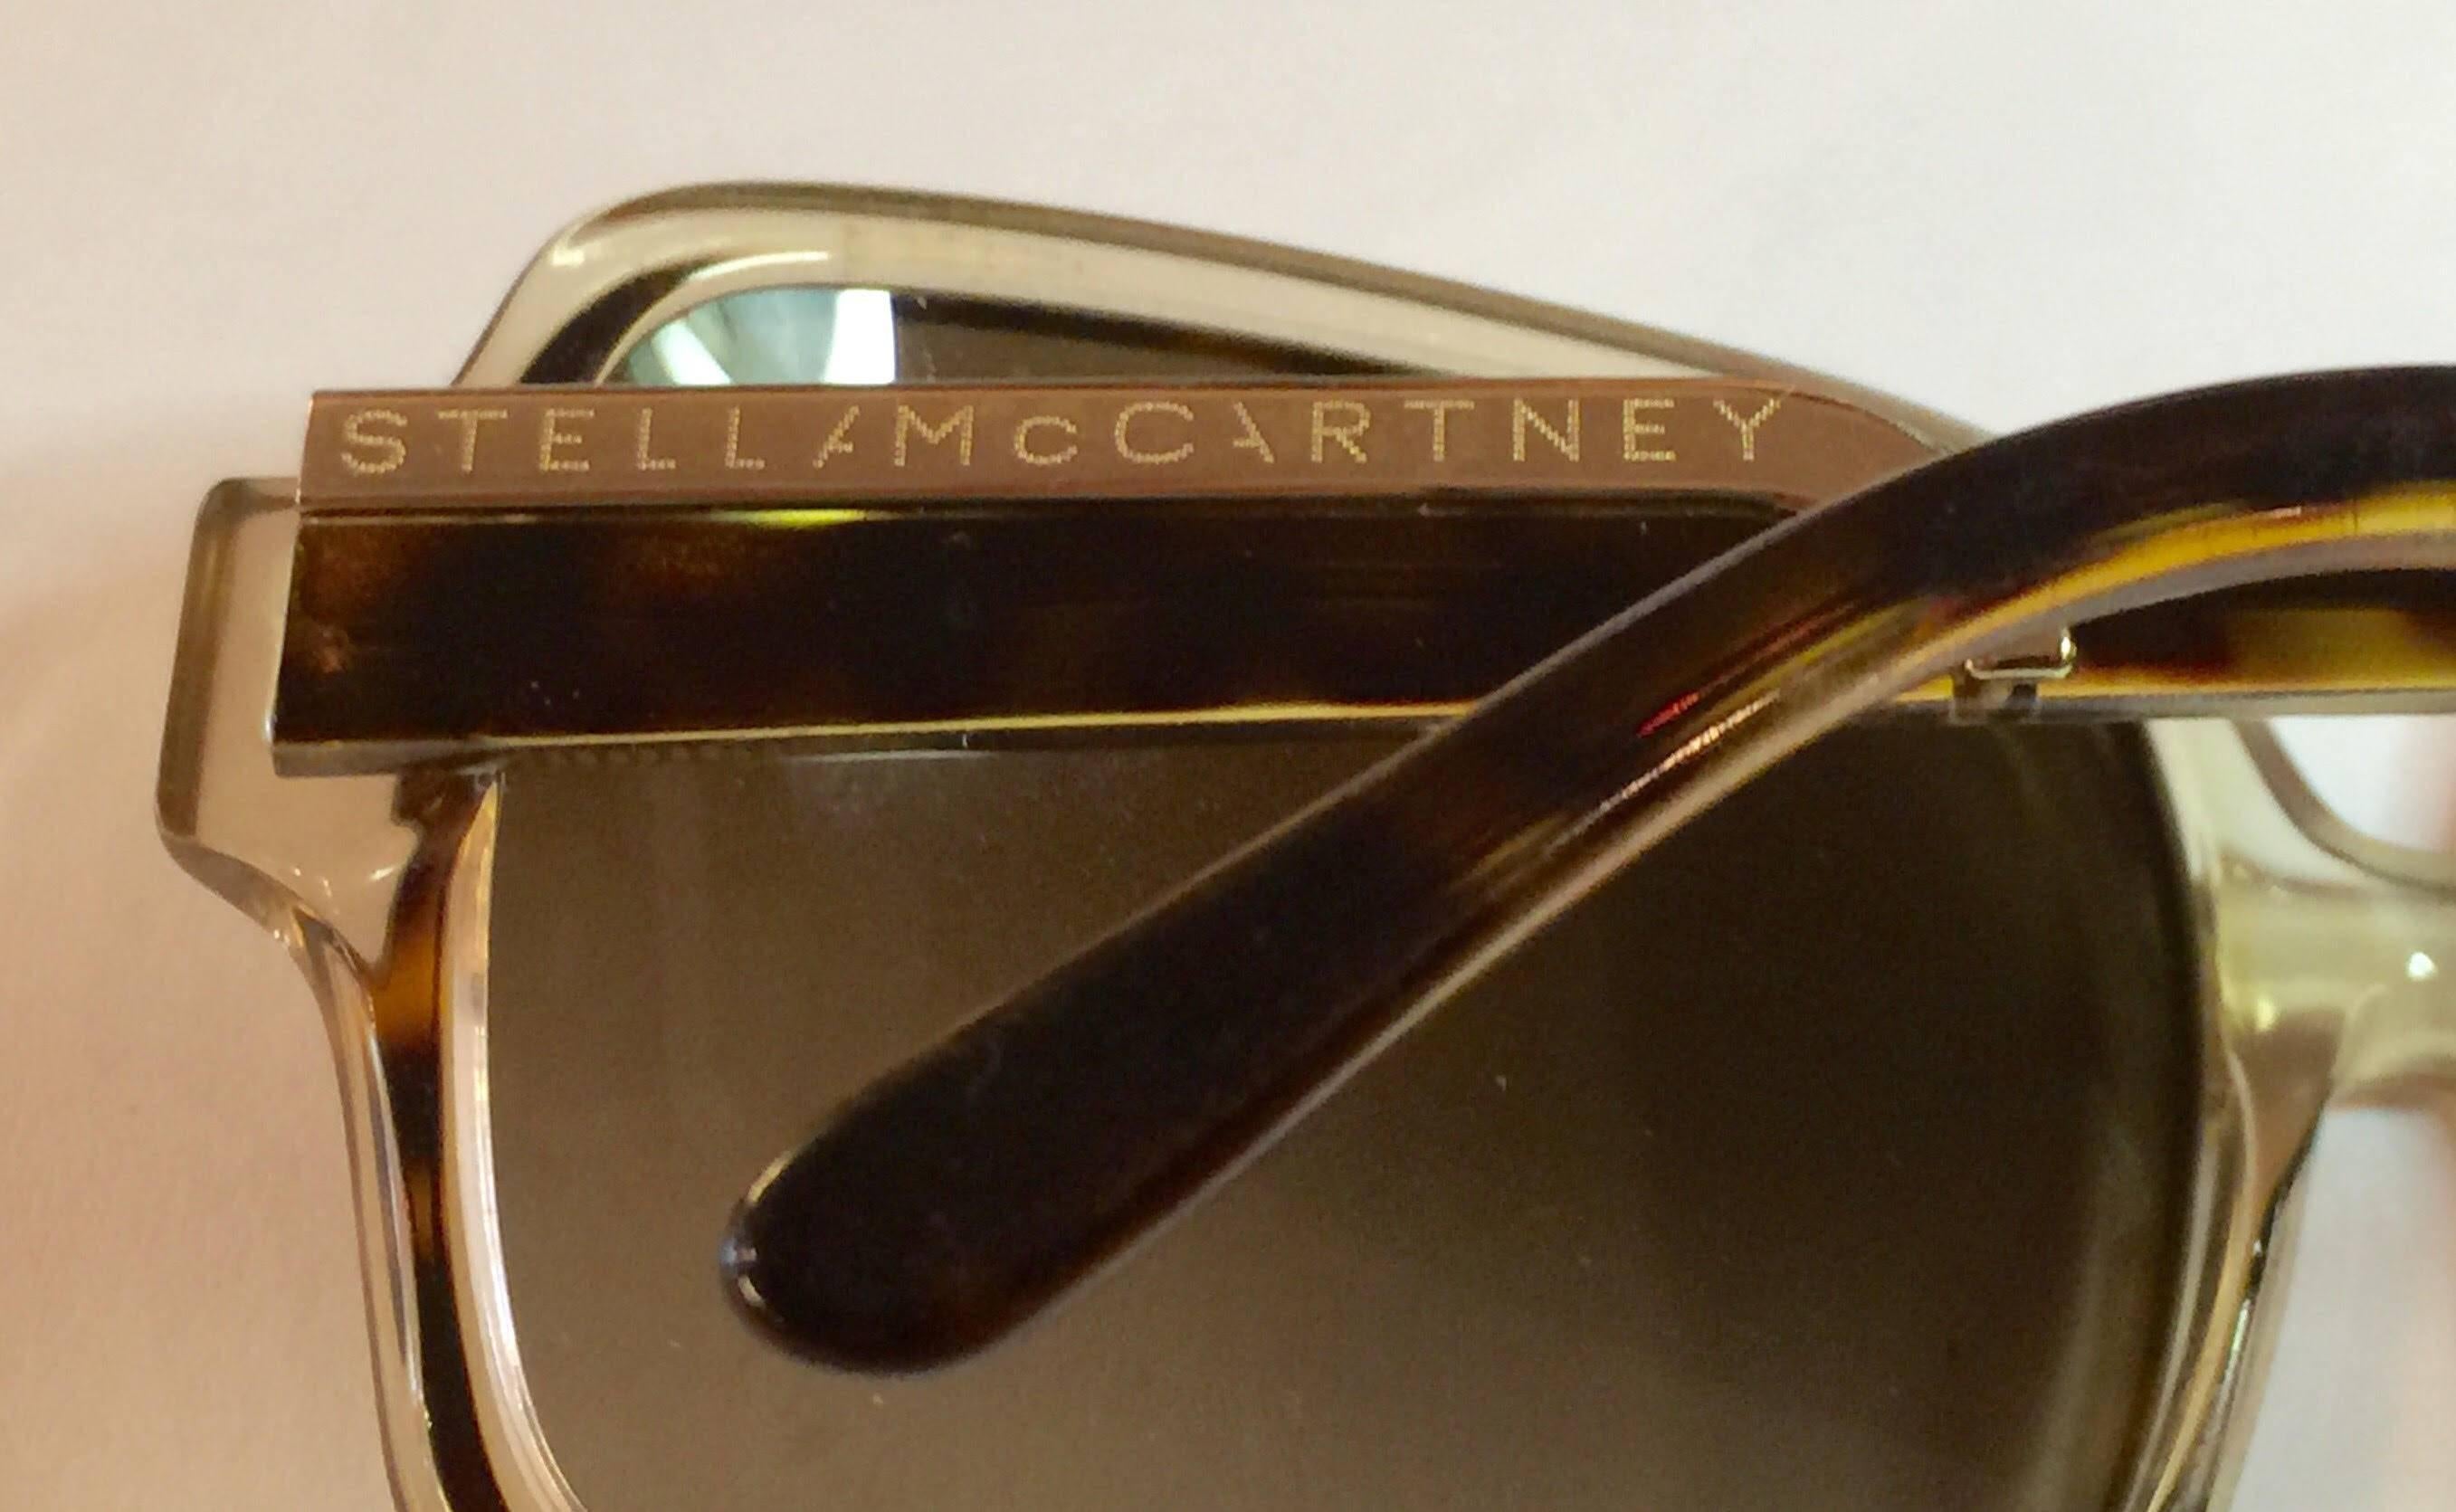 21st Century Designer Sunglasses by noteworthy British designer Stella McCartney. Shades of clear amber and torotise layered make these oversized dunoptics wonderful and highly wearable. Original box included.